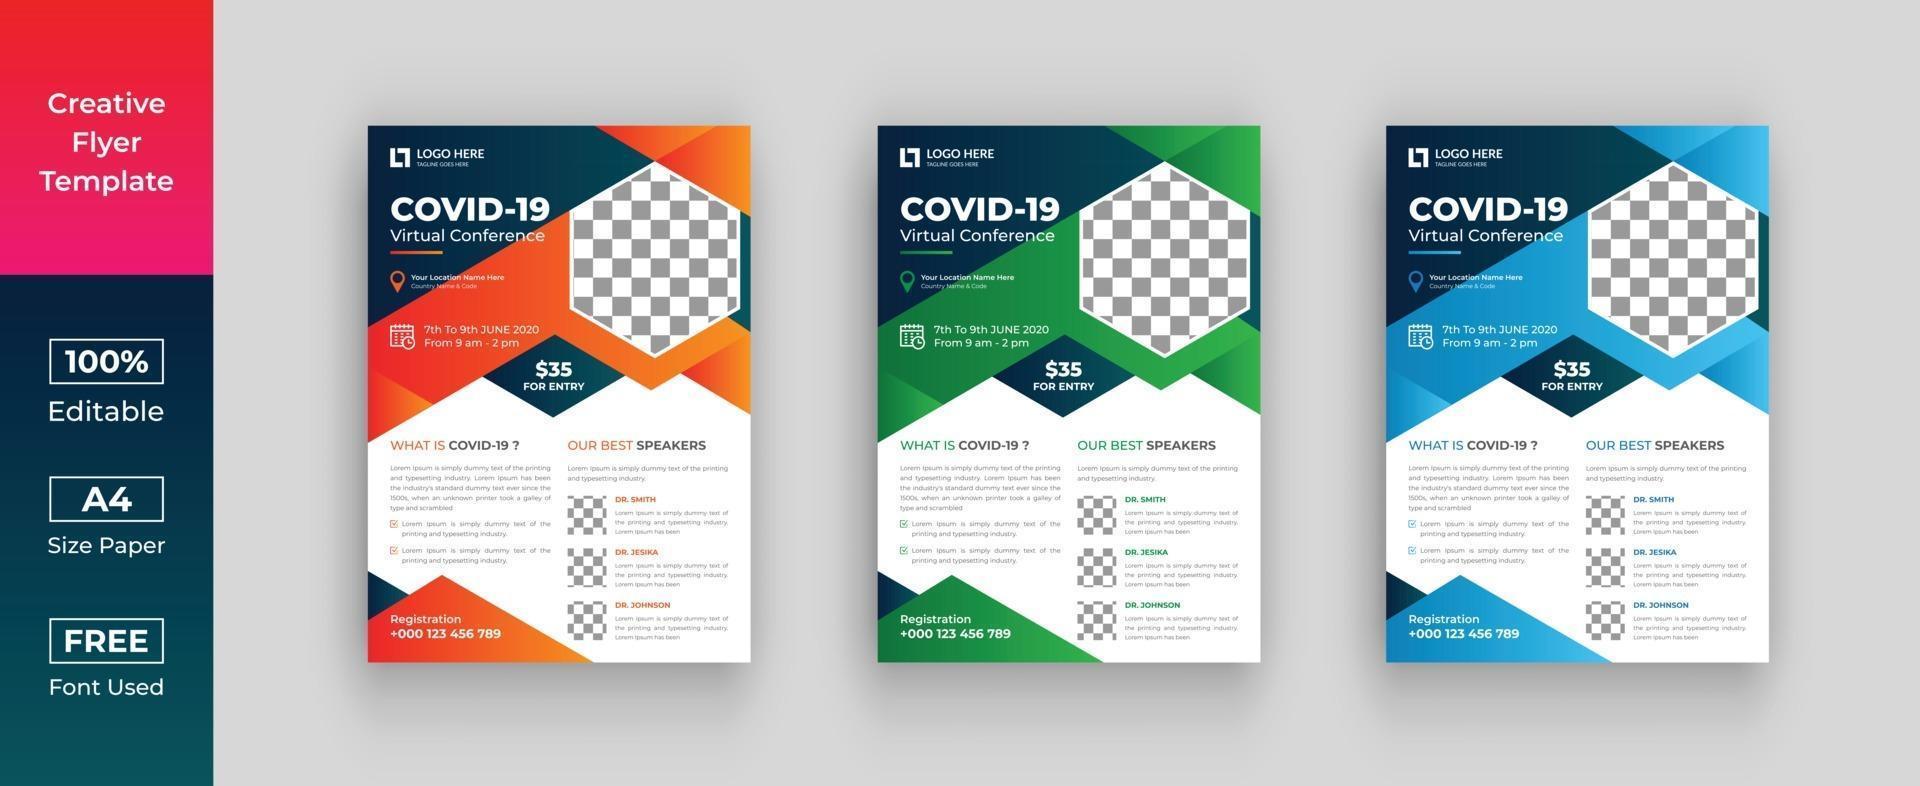 plantilla de folleto de conferencia covid-19, folleto o póster de covid-19 vector